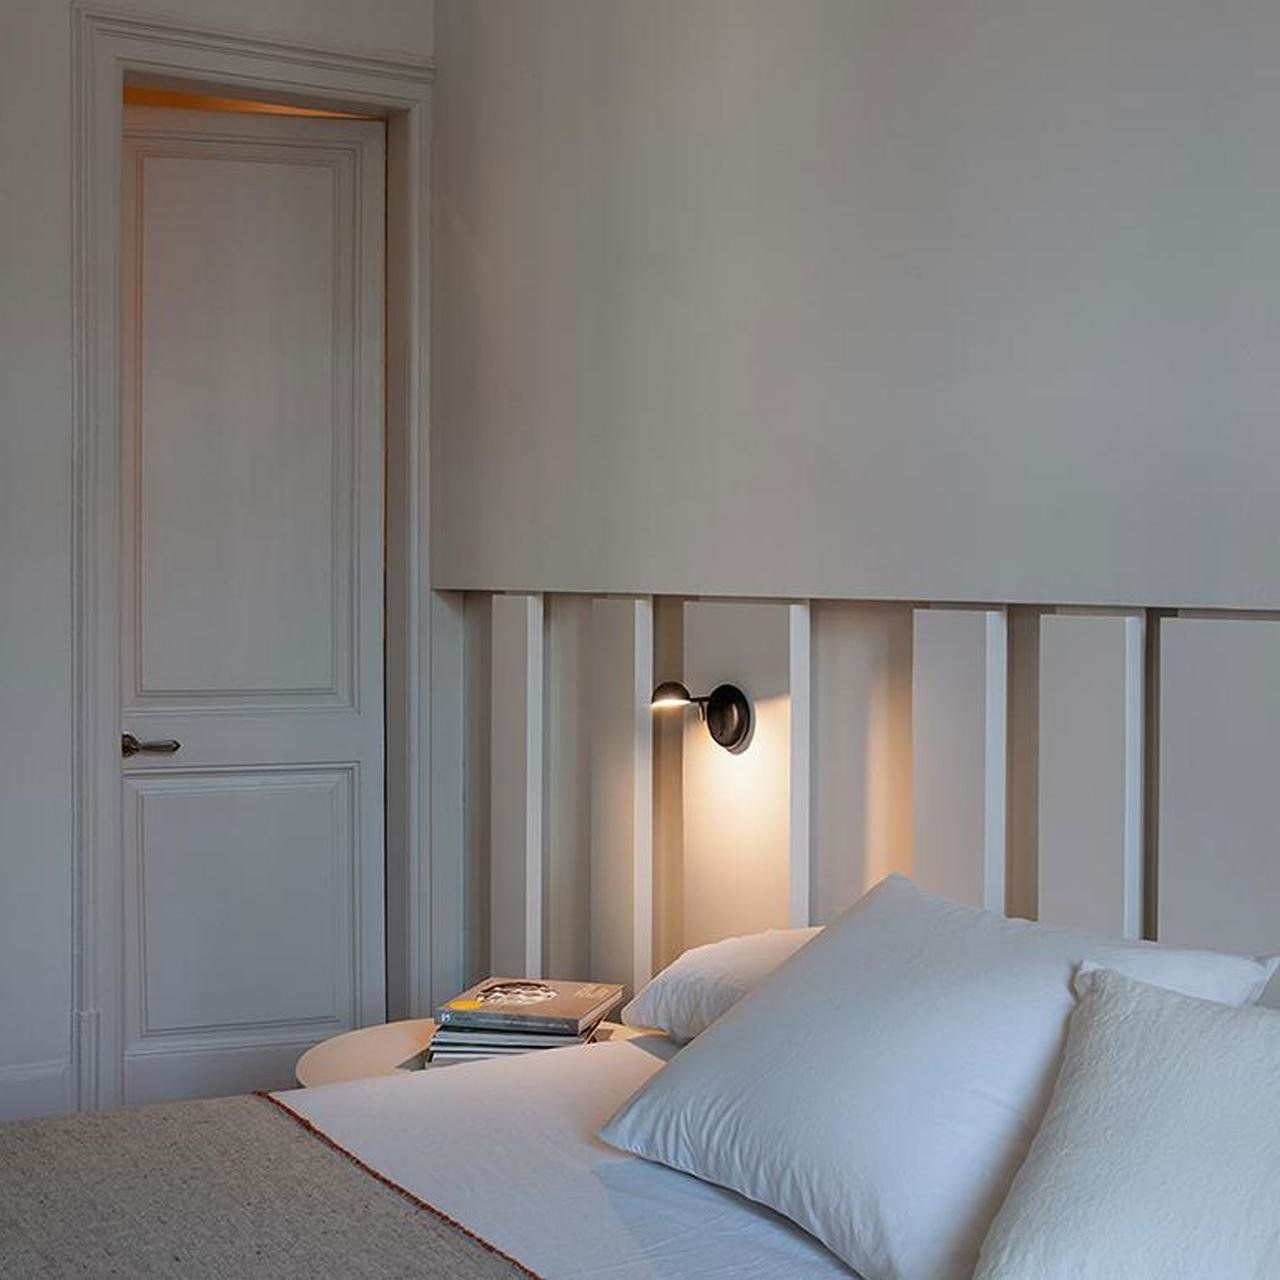 Designer wall lamp (Sconce) PIN by Romatti